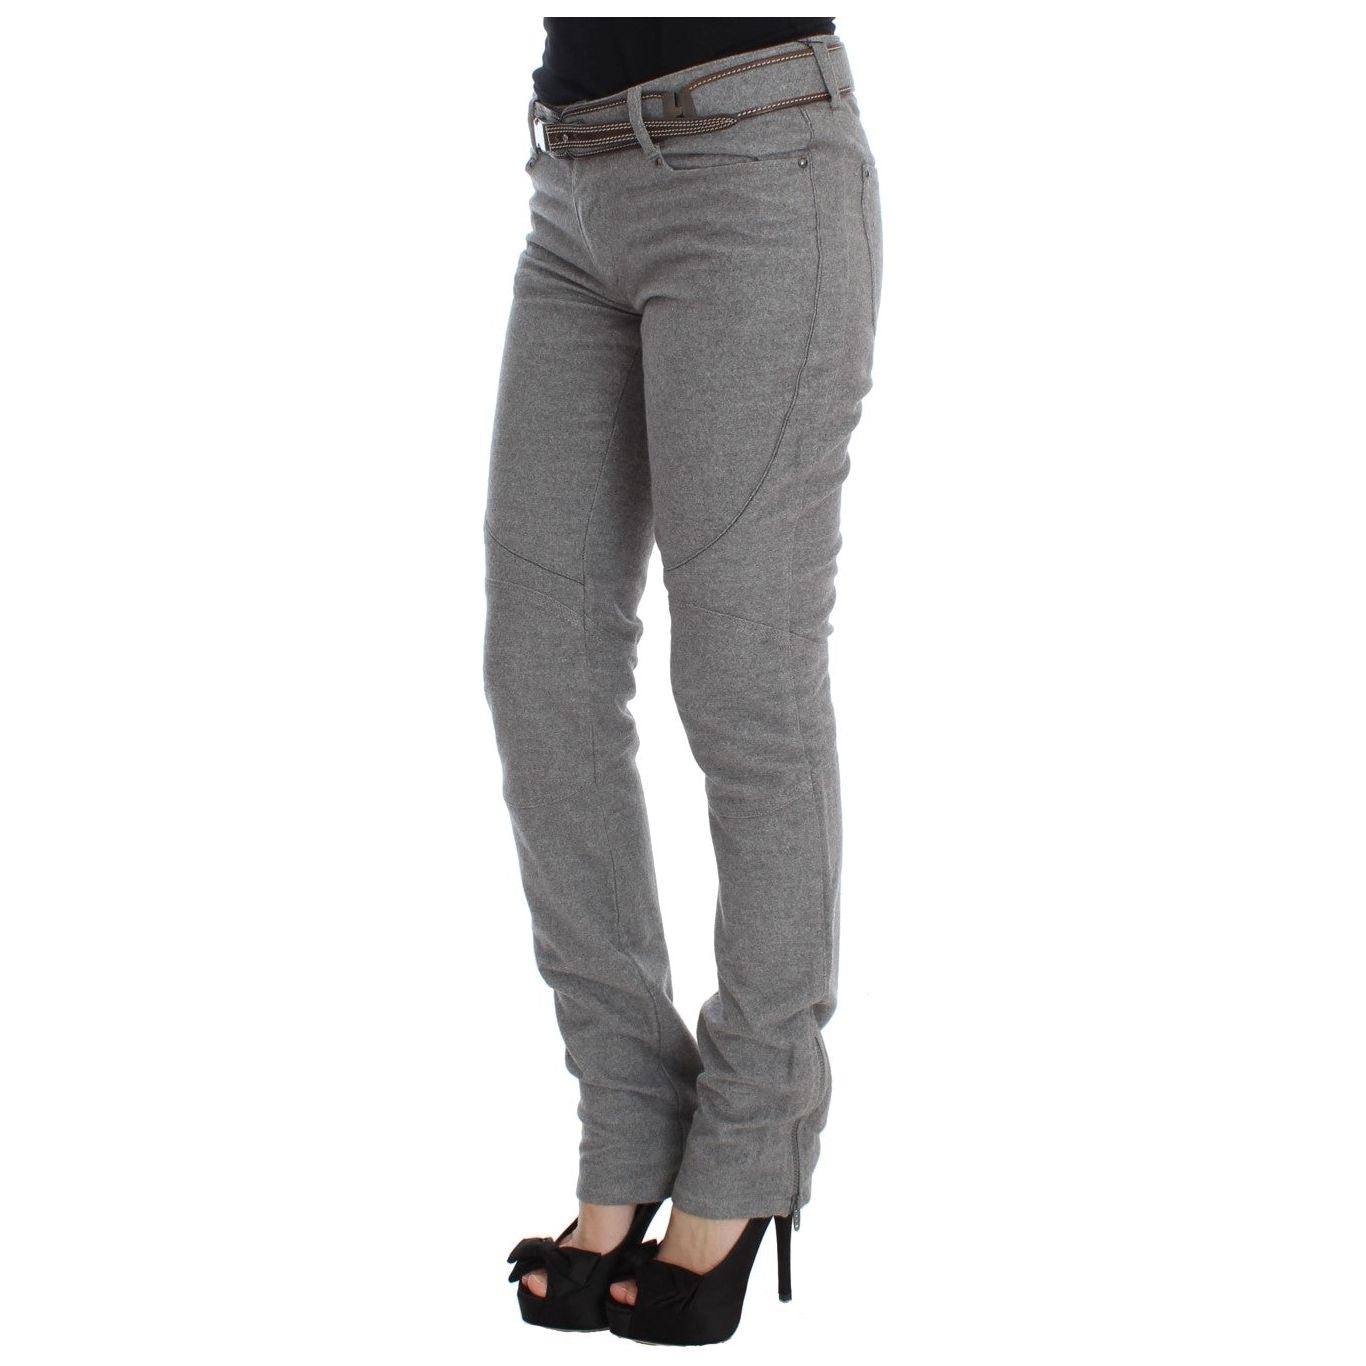 Ermanno Scervino Chic Gray Casual Cotton Pants gray-cotton-slim-fit-casual-bootcut-pants 330385-gray-cotton-slim-fit-casual-bootcut-pants-1.jpg